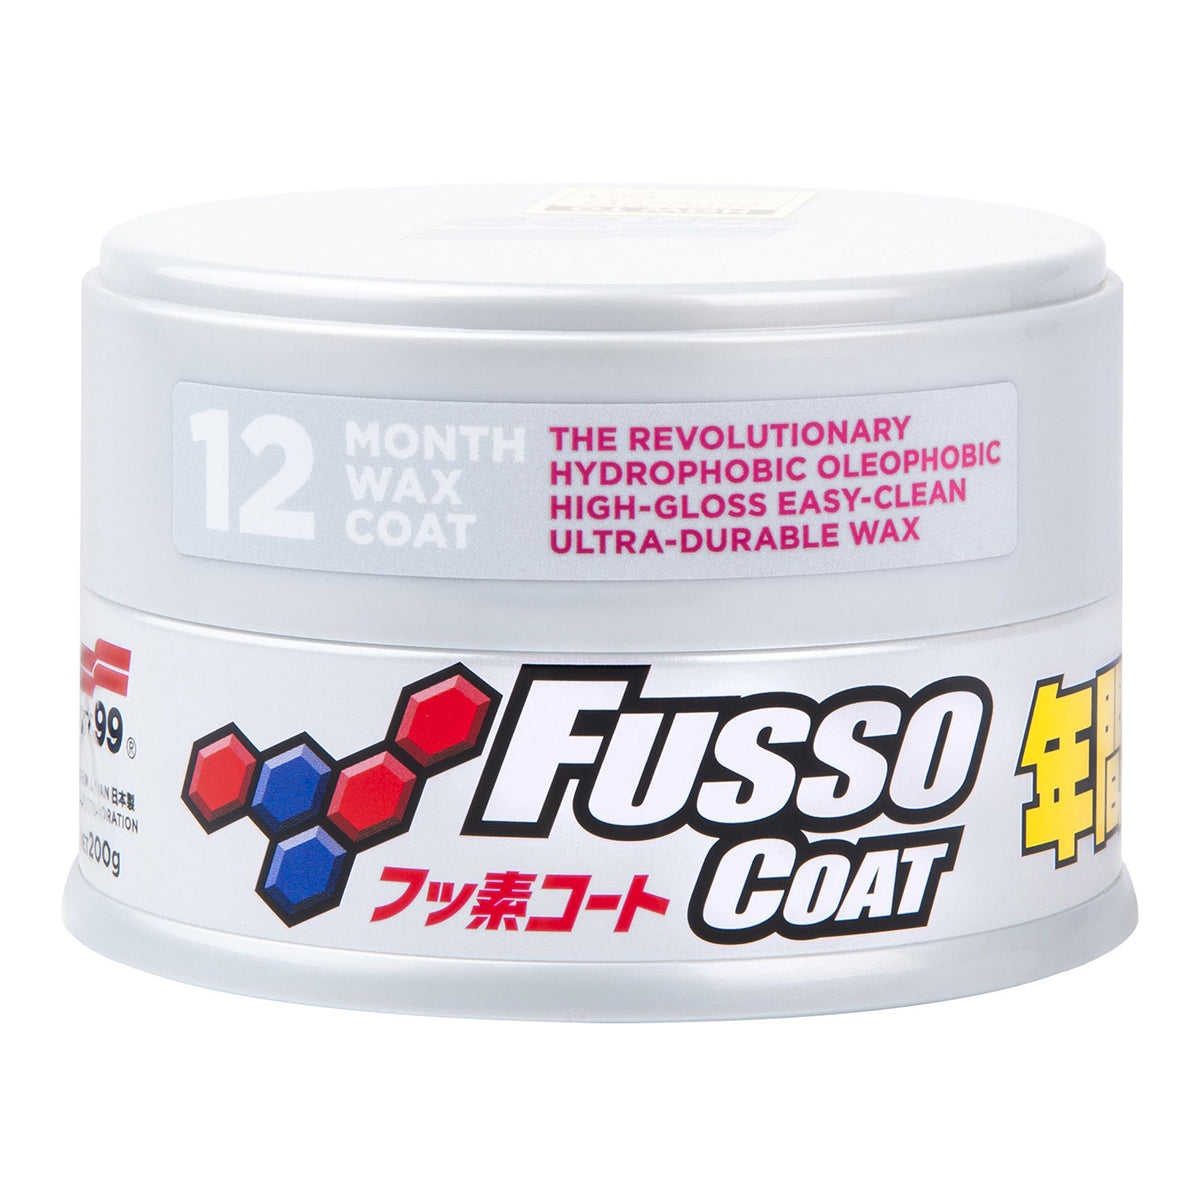 Soft 99 Fusso Coat 12 Months Wax Light